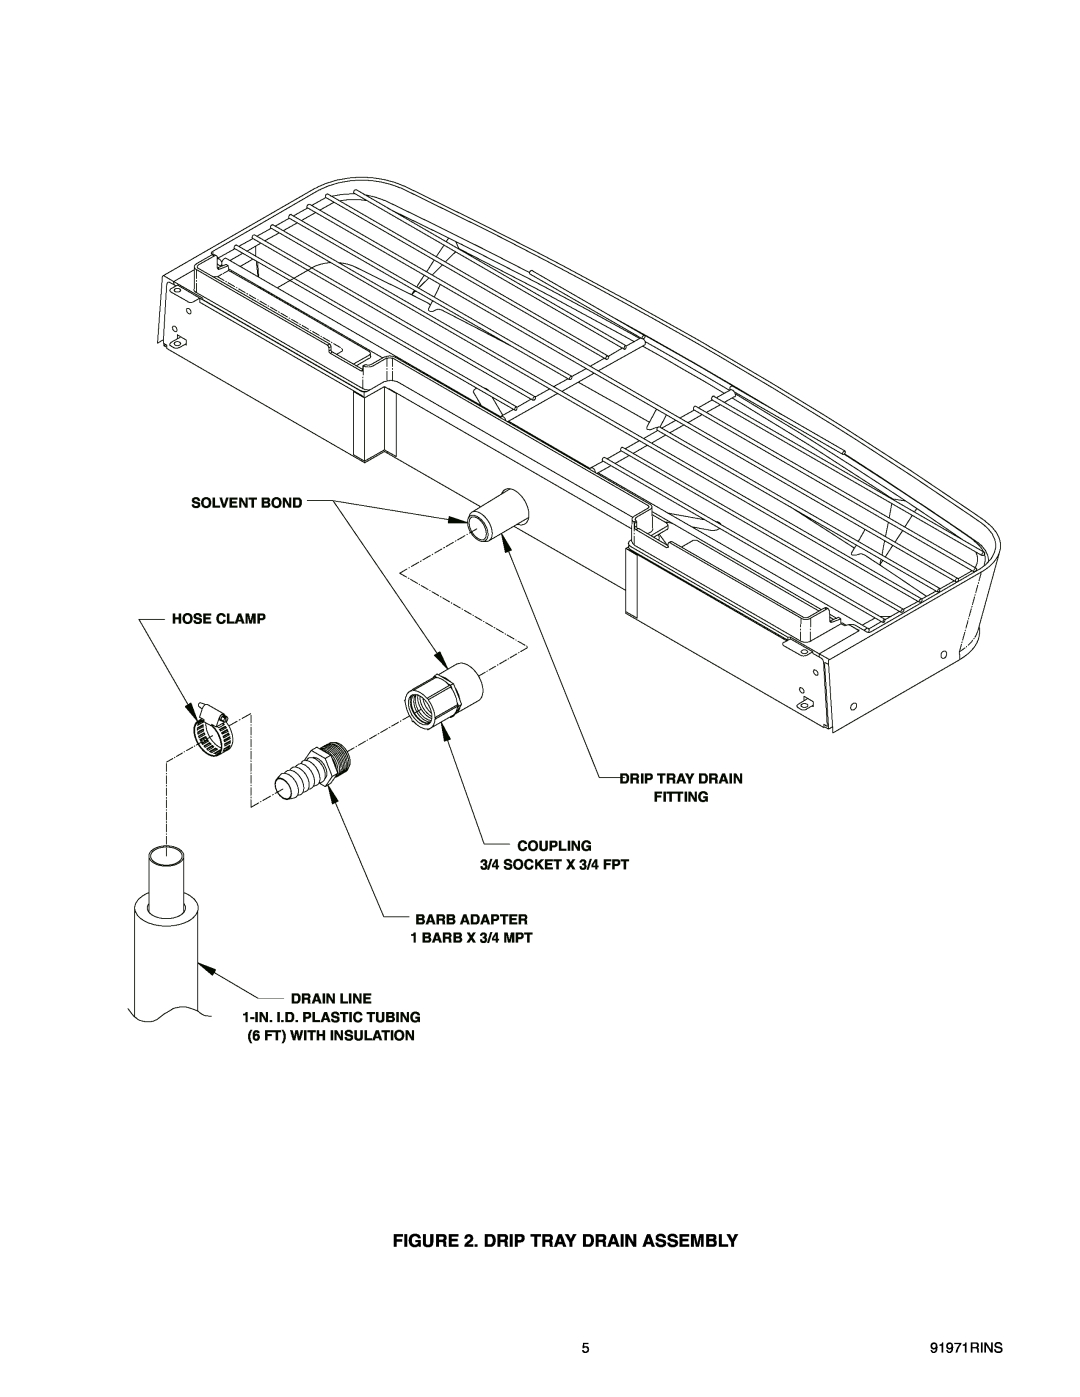 Cornelius ENDURO-150 installation manual Drip Tray Drain Assembly, Solvent Bond Hose Clamp Drip Tray Drain Fitting 